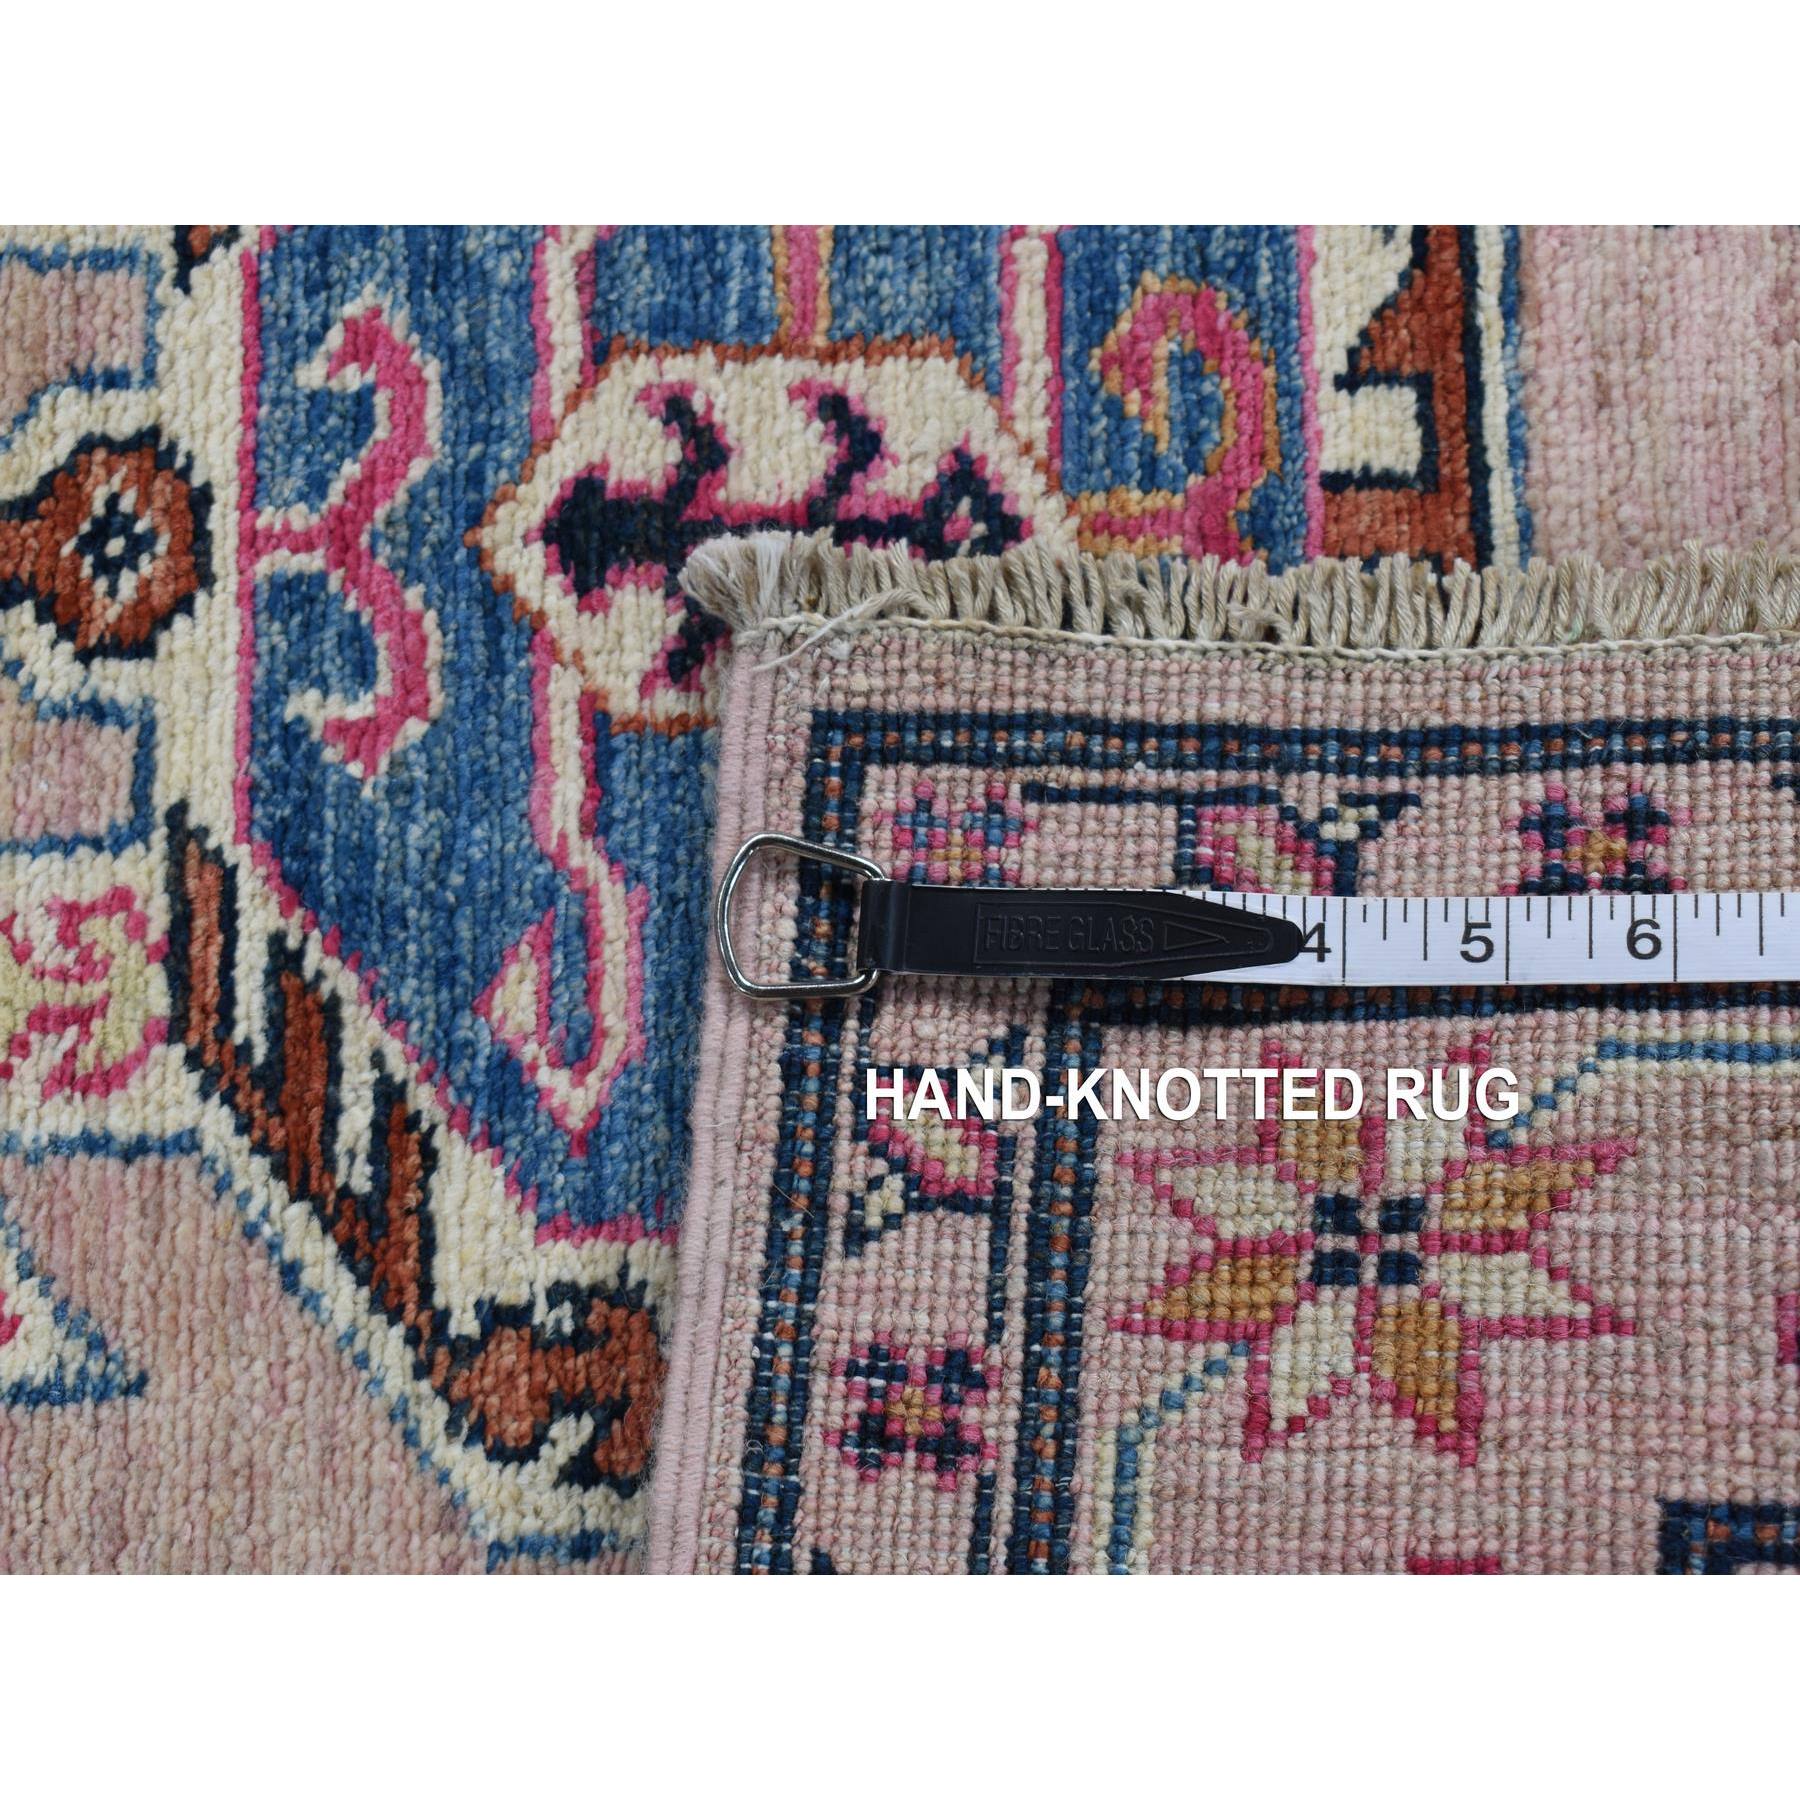 2'8"x8'10" Pastel Pink, Hand Woven, Afghan Super Kazak with Geometric Motif, Pure Wool, Runner, Oriental Rug 